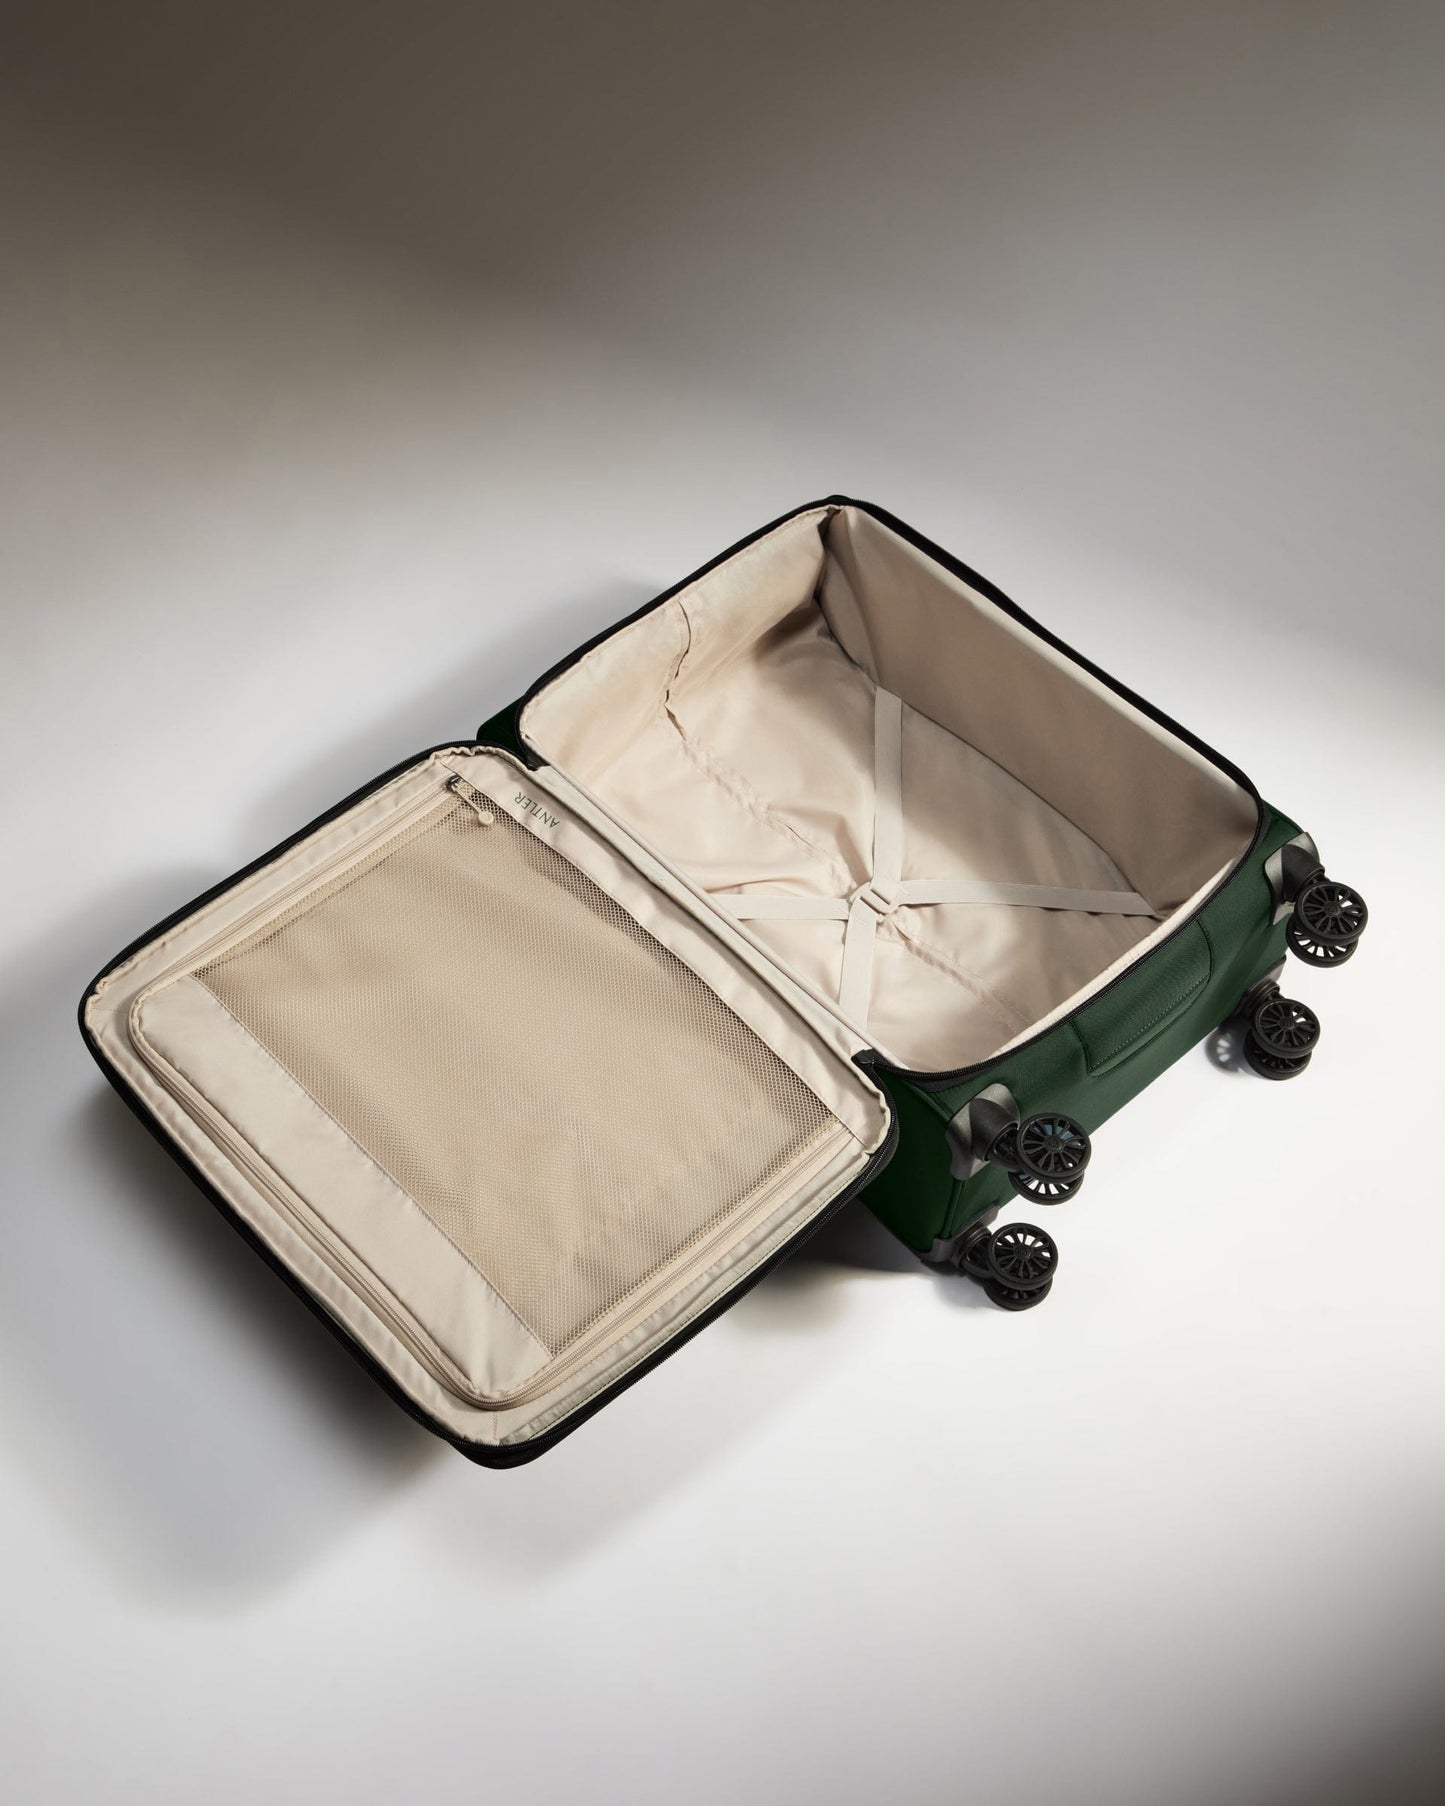 Antler Luggage -  Soft Stripe Set in Antler Green - Soft Suitcase Soft Stripe Set in Green | Soft Suitcase